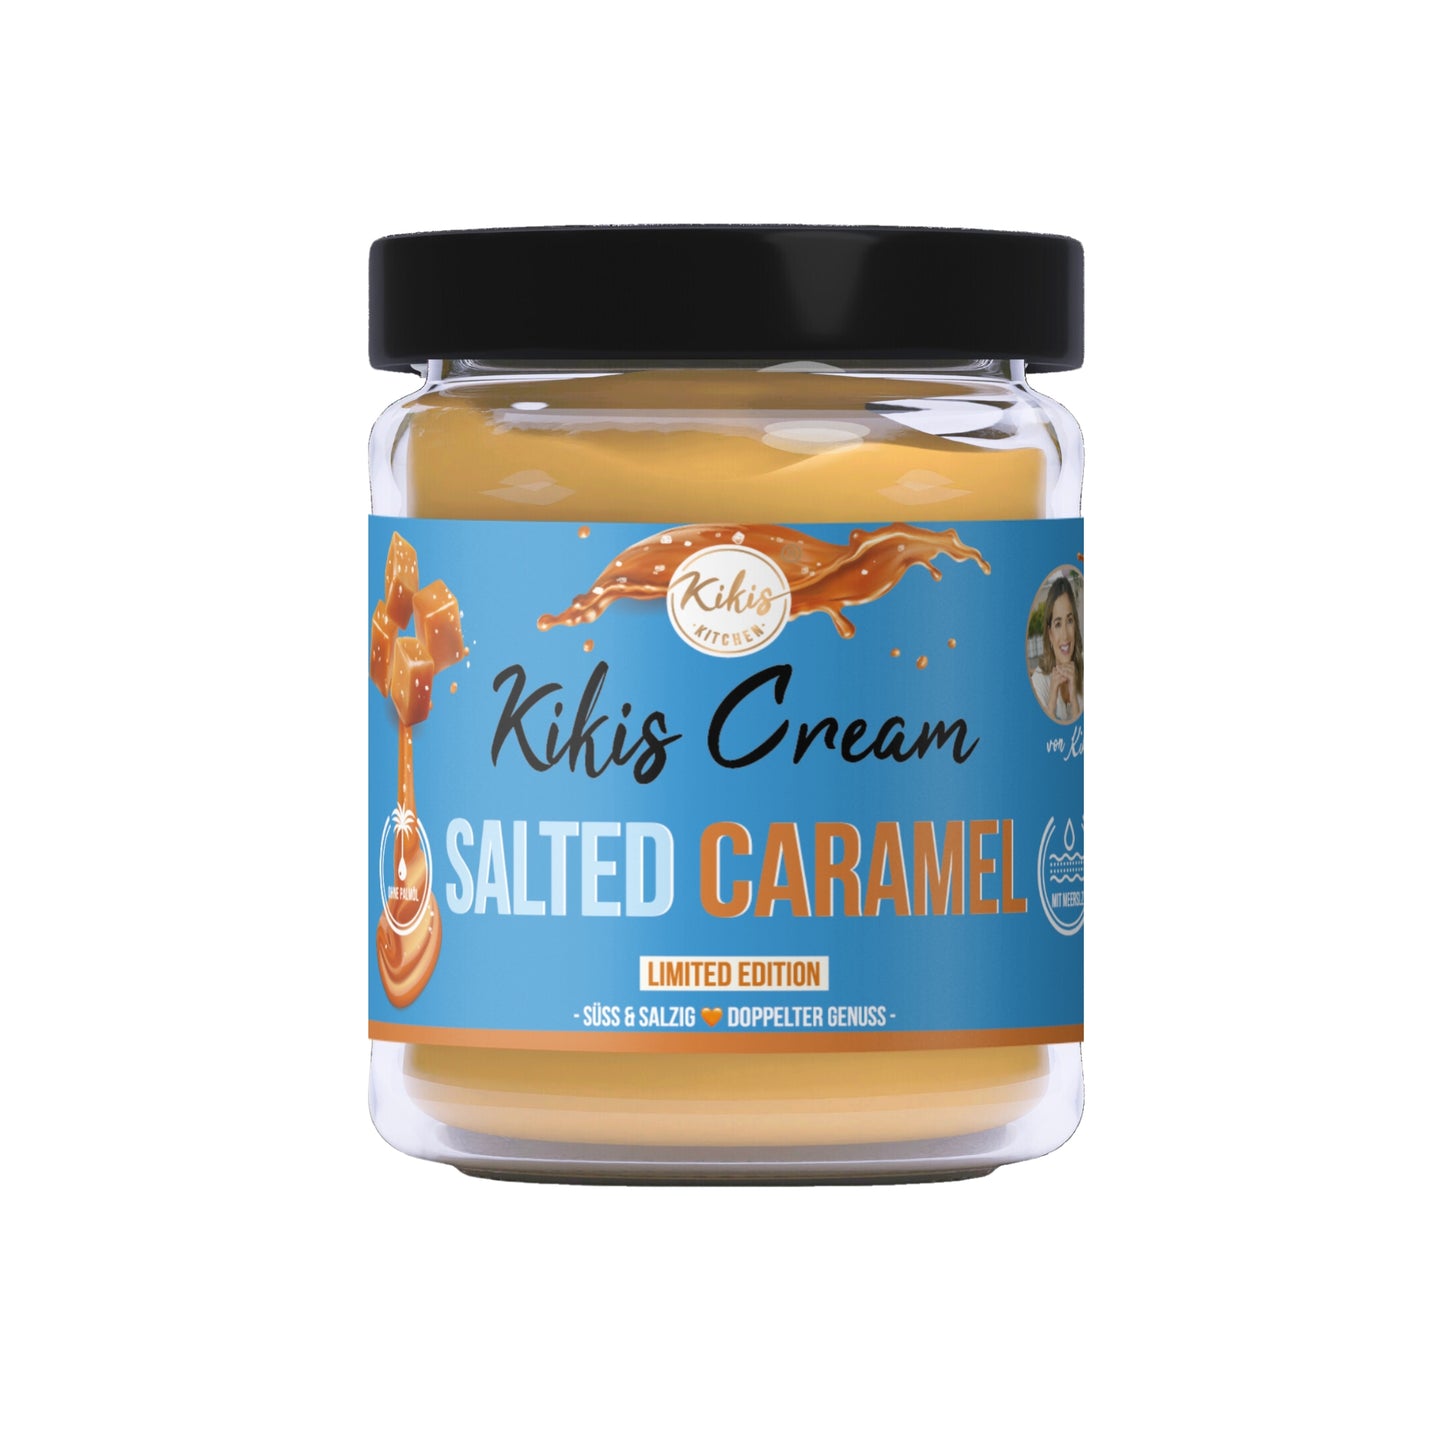 NEU: Kikis Cream SALTED CARAMEL